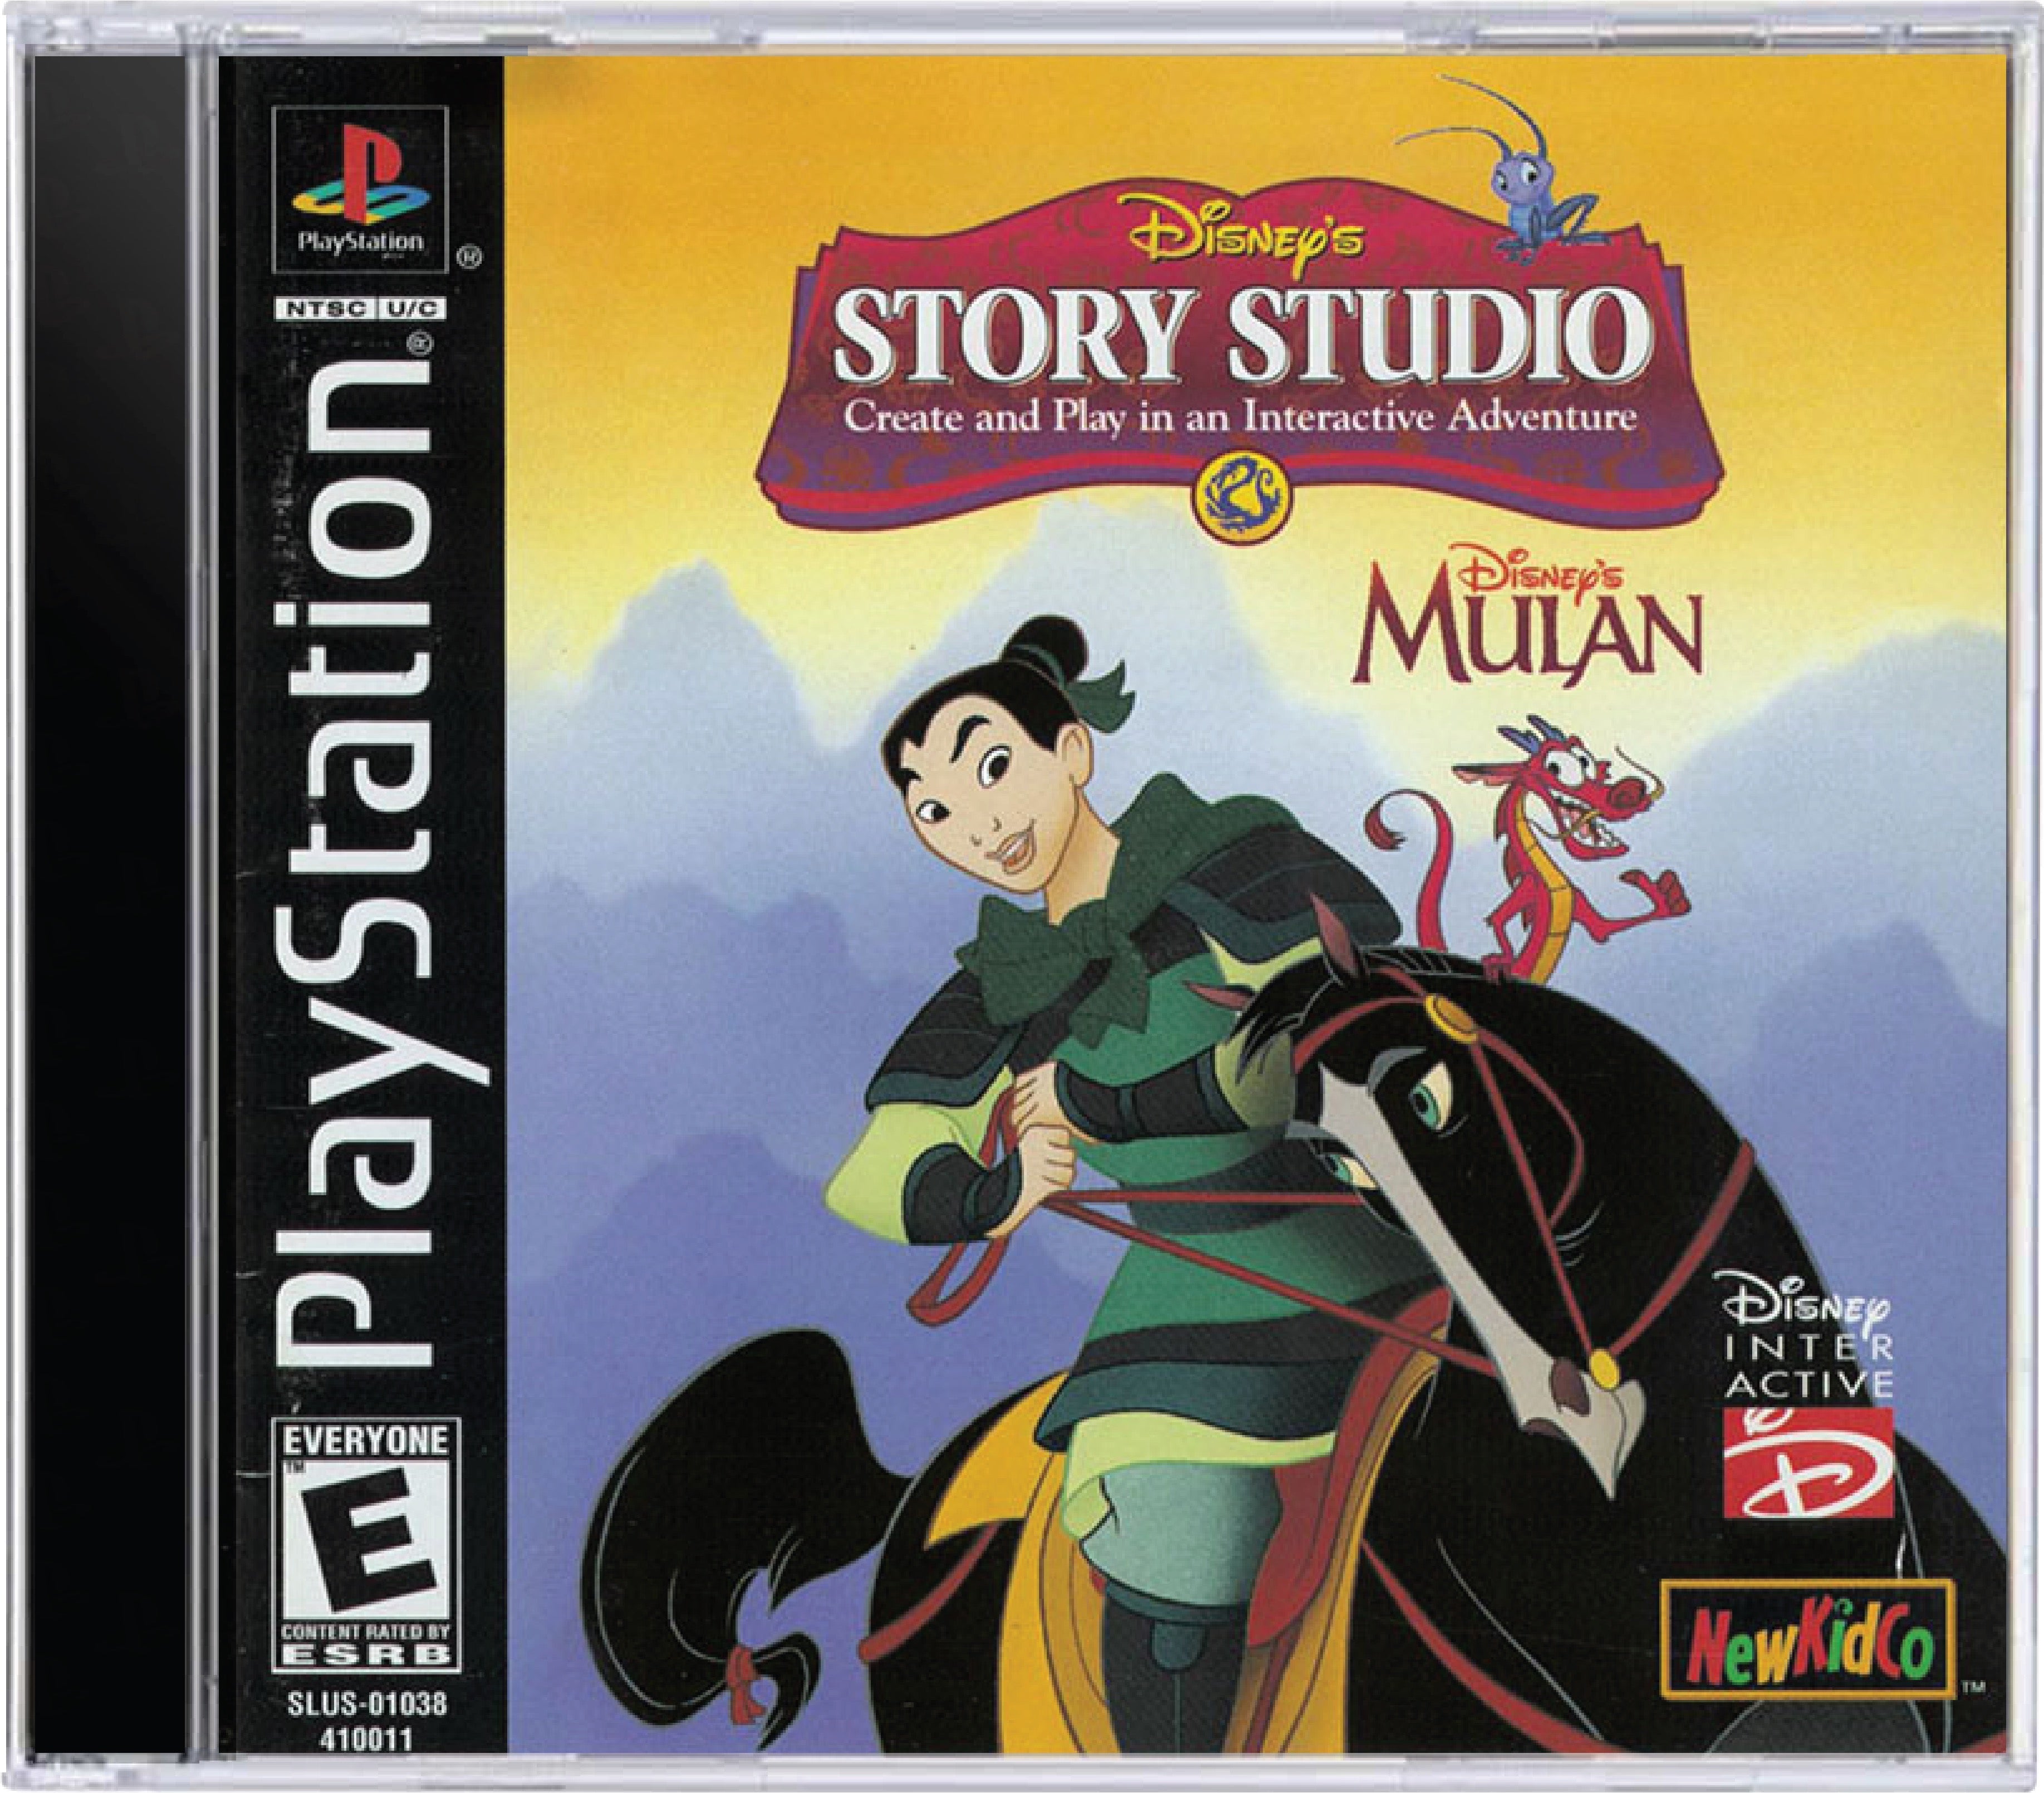 Disney's Story Studio Mulan Cover Art and Product Photo